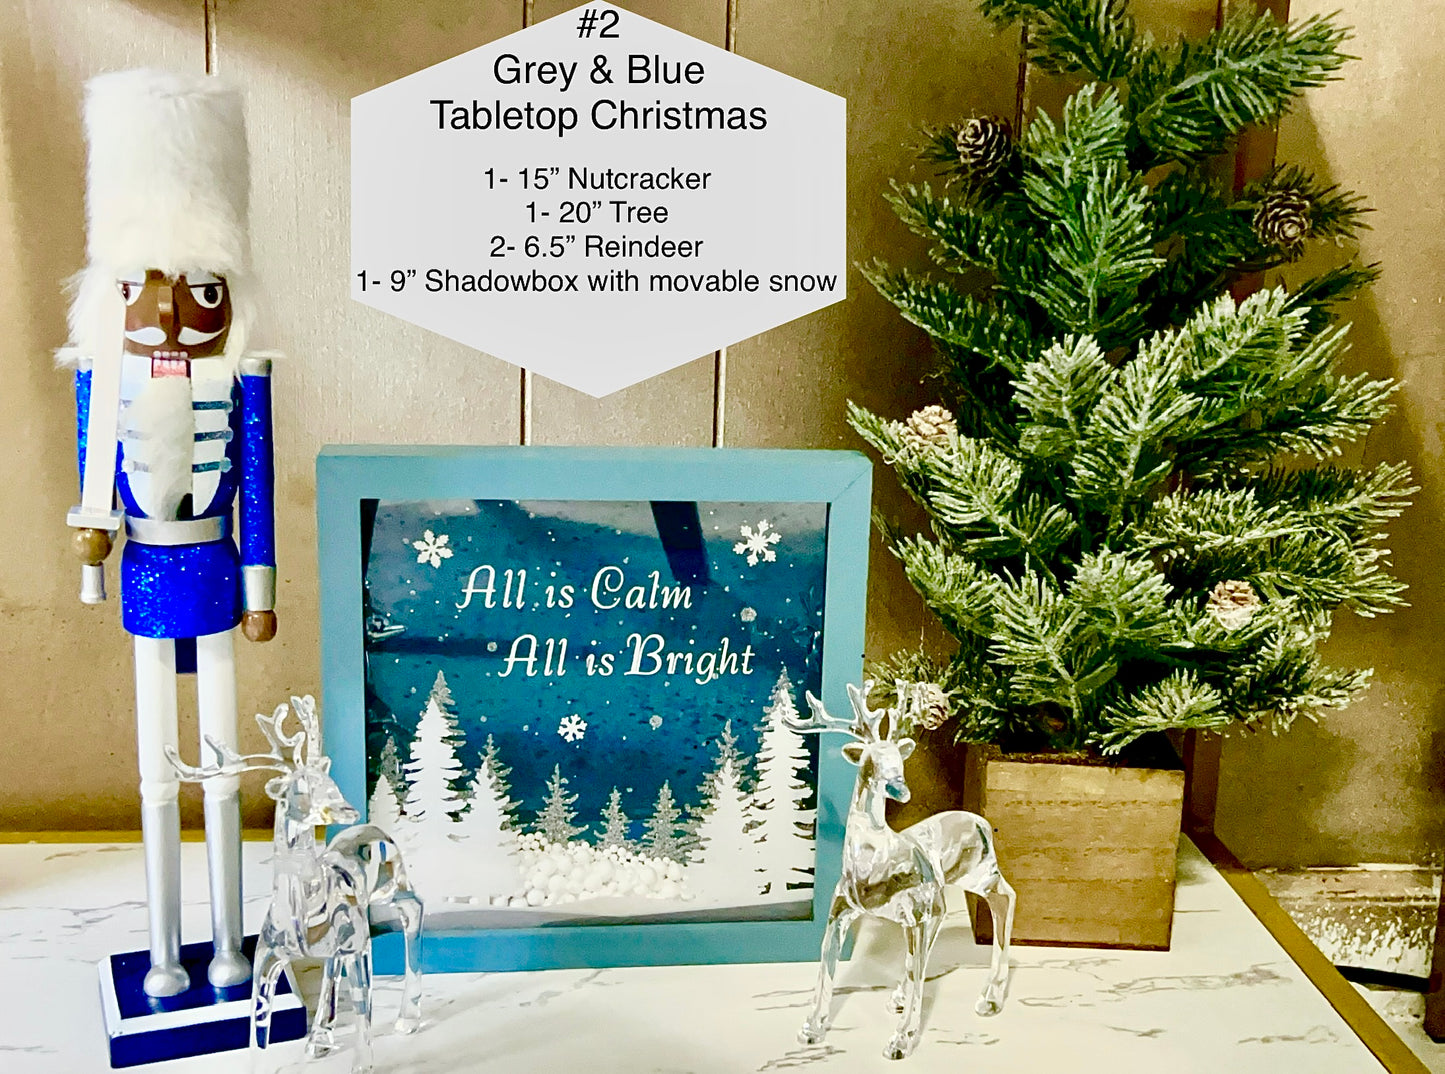 Grey & Blue Tabletop Christmas Set